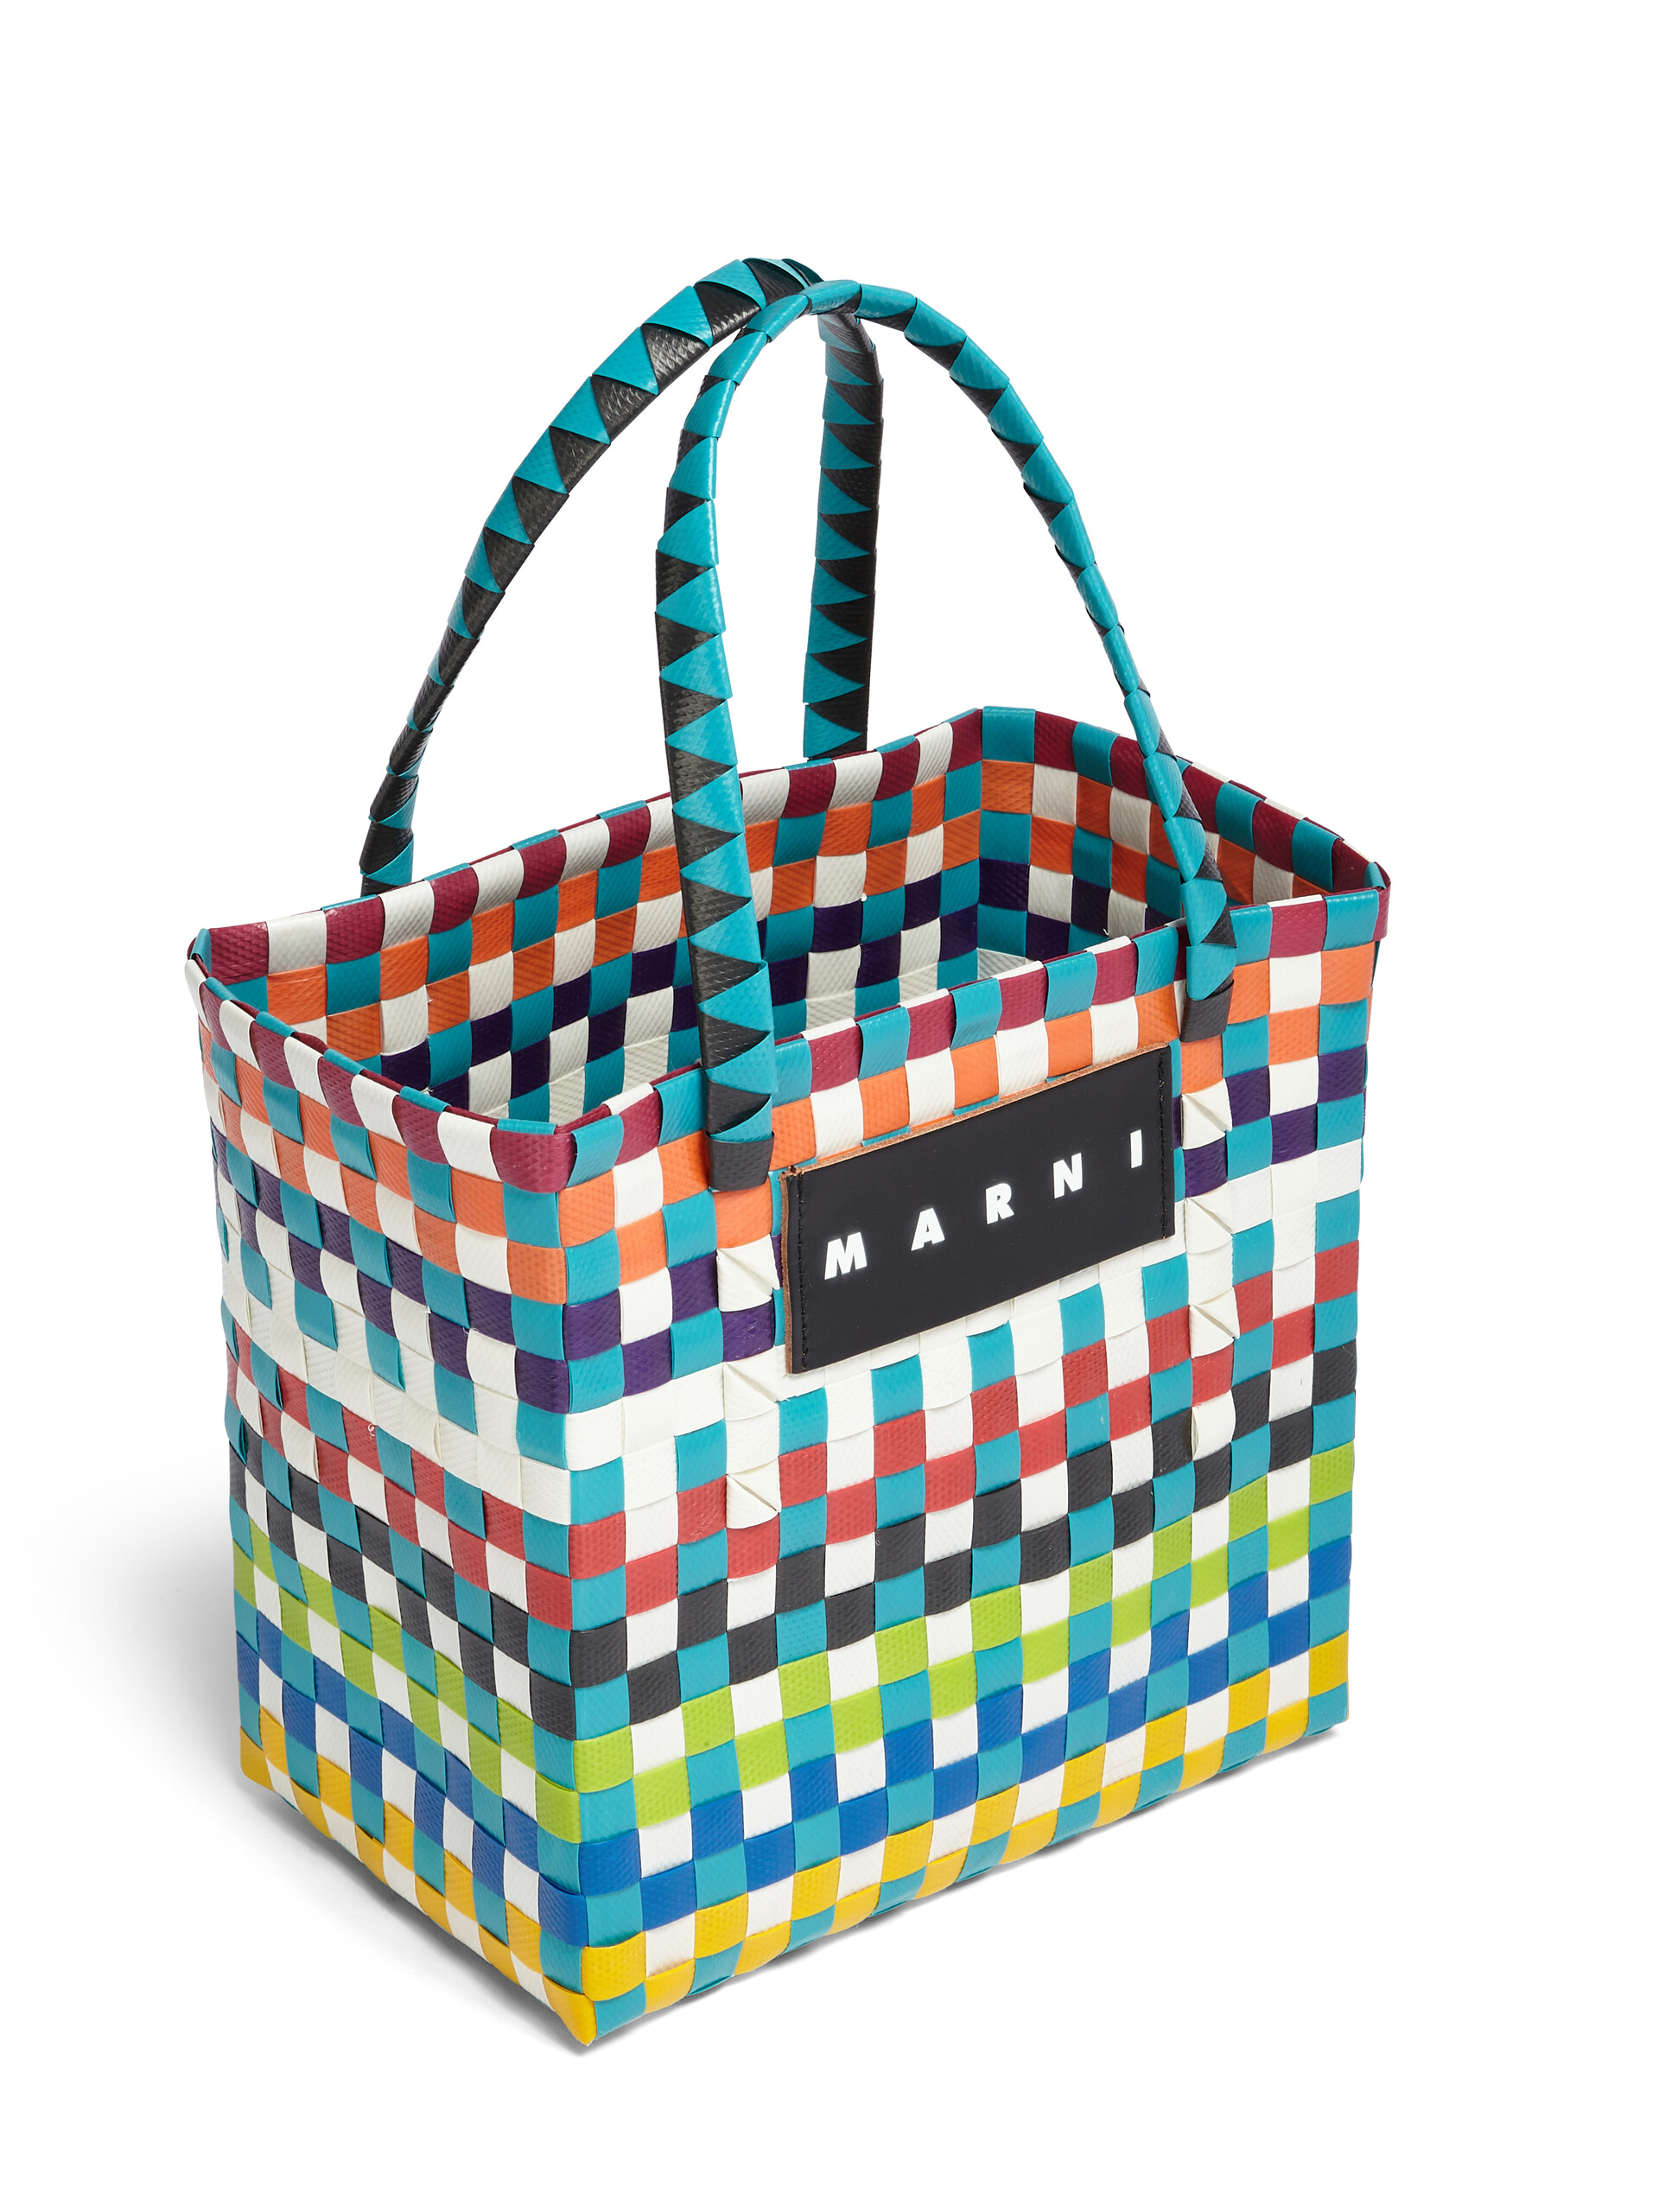 MARNI MARKET MINI BASKET bag in multicolor woven material - Bags - Image 4